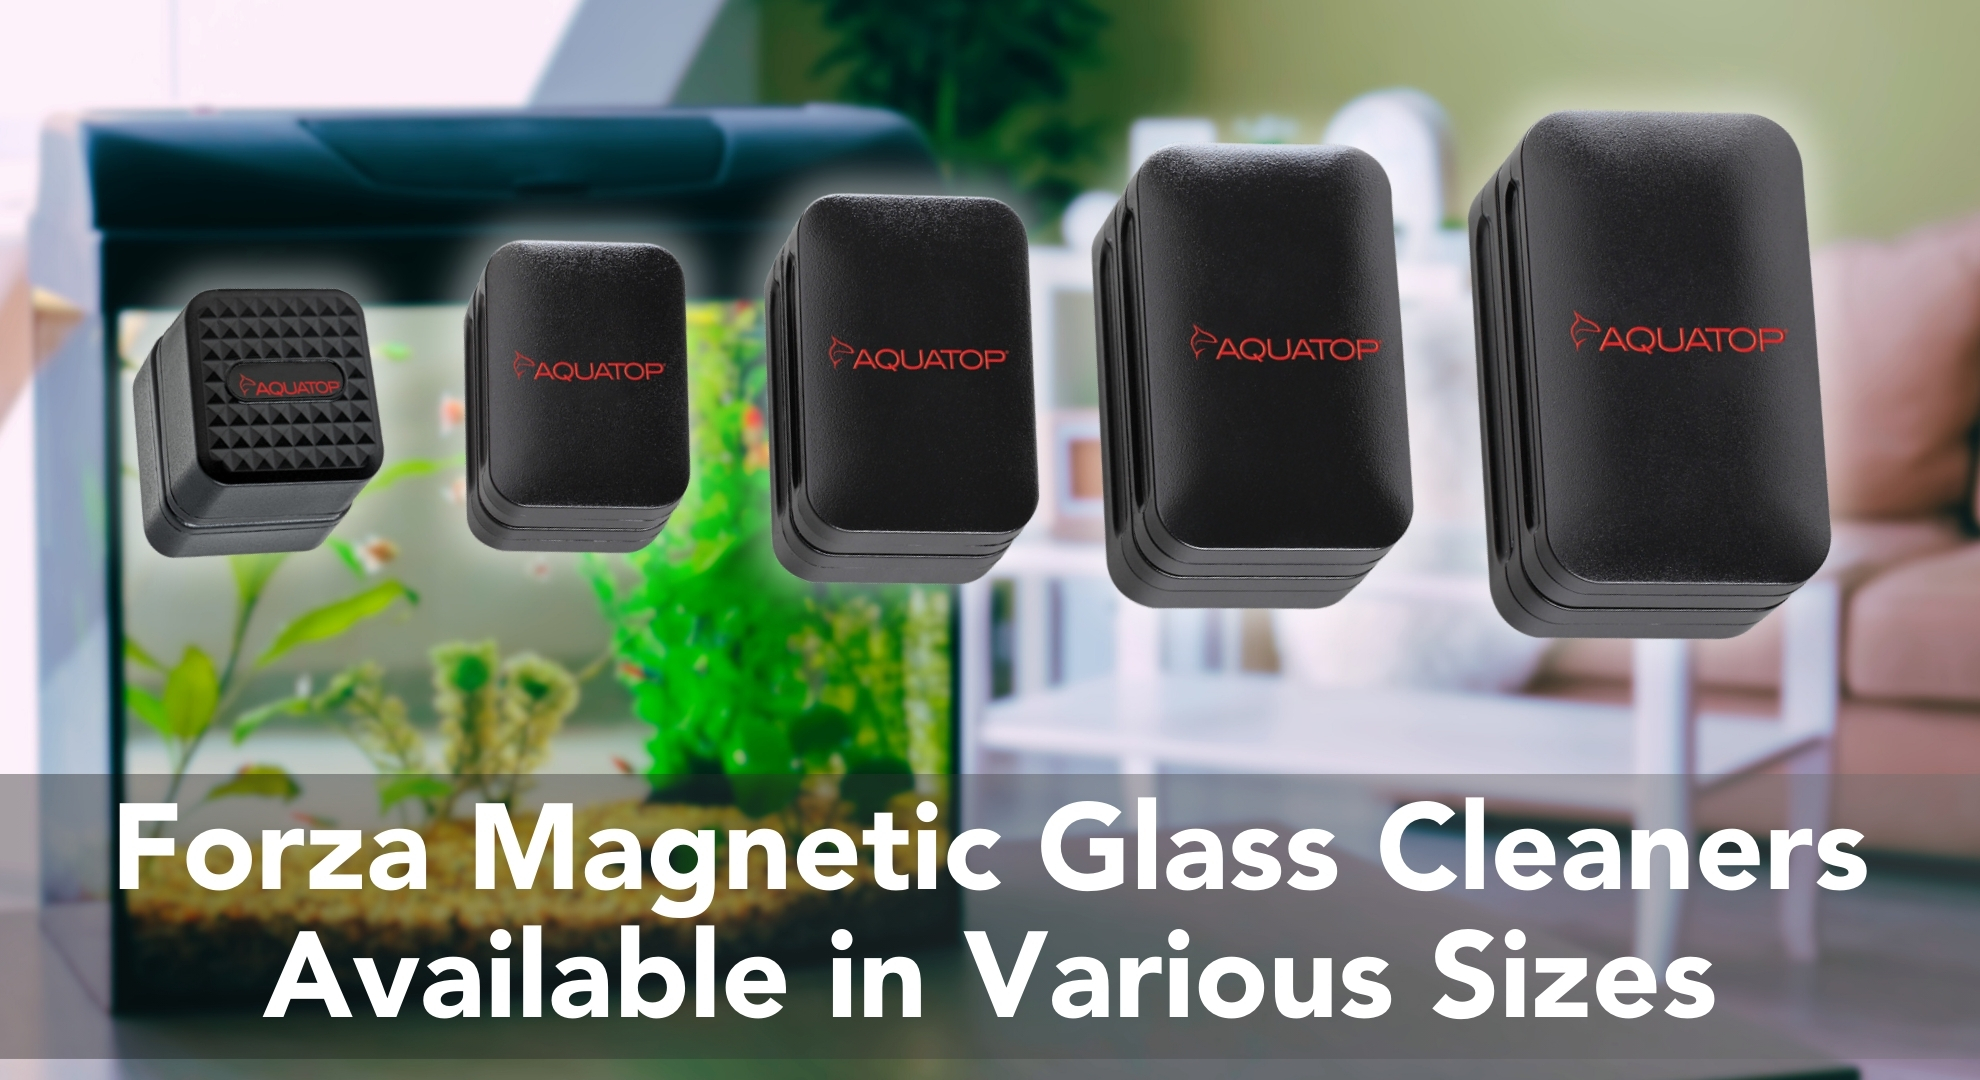 Aquatop Magnetic Glass Cleaners: Versatile Sizes for Every Aquarium